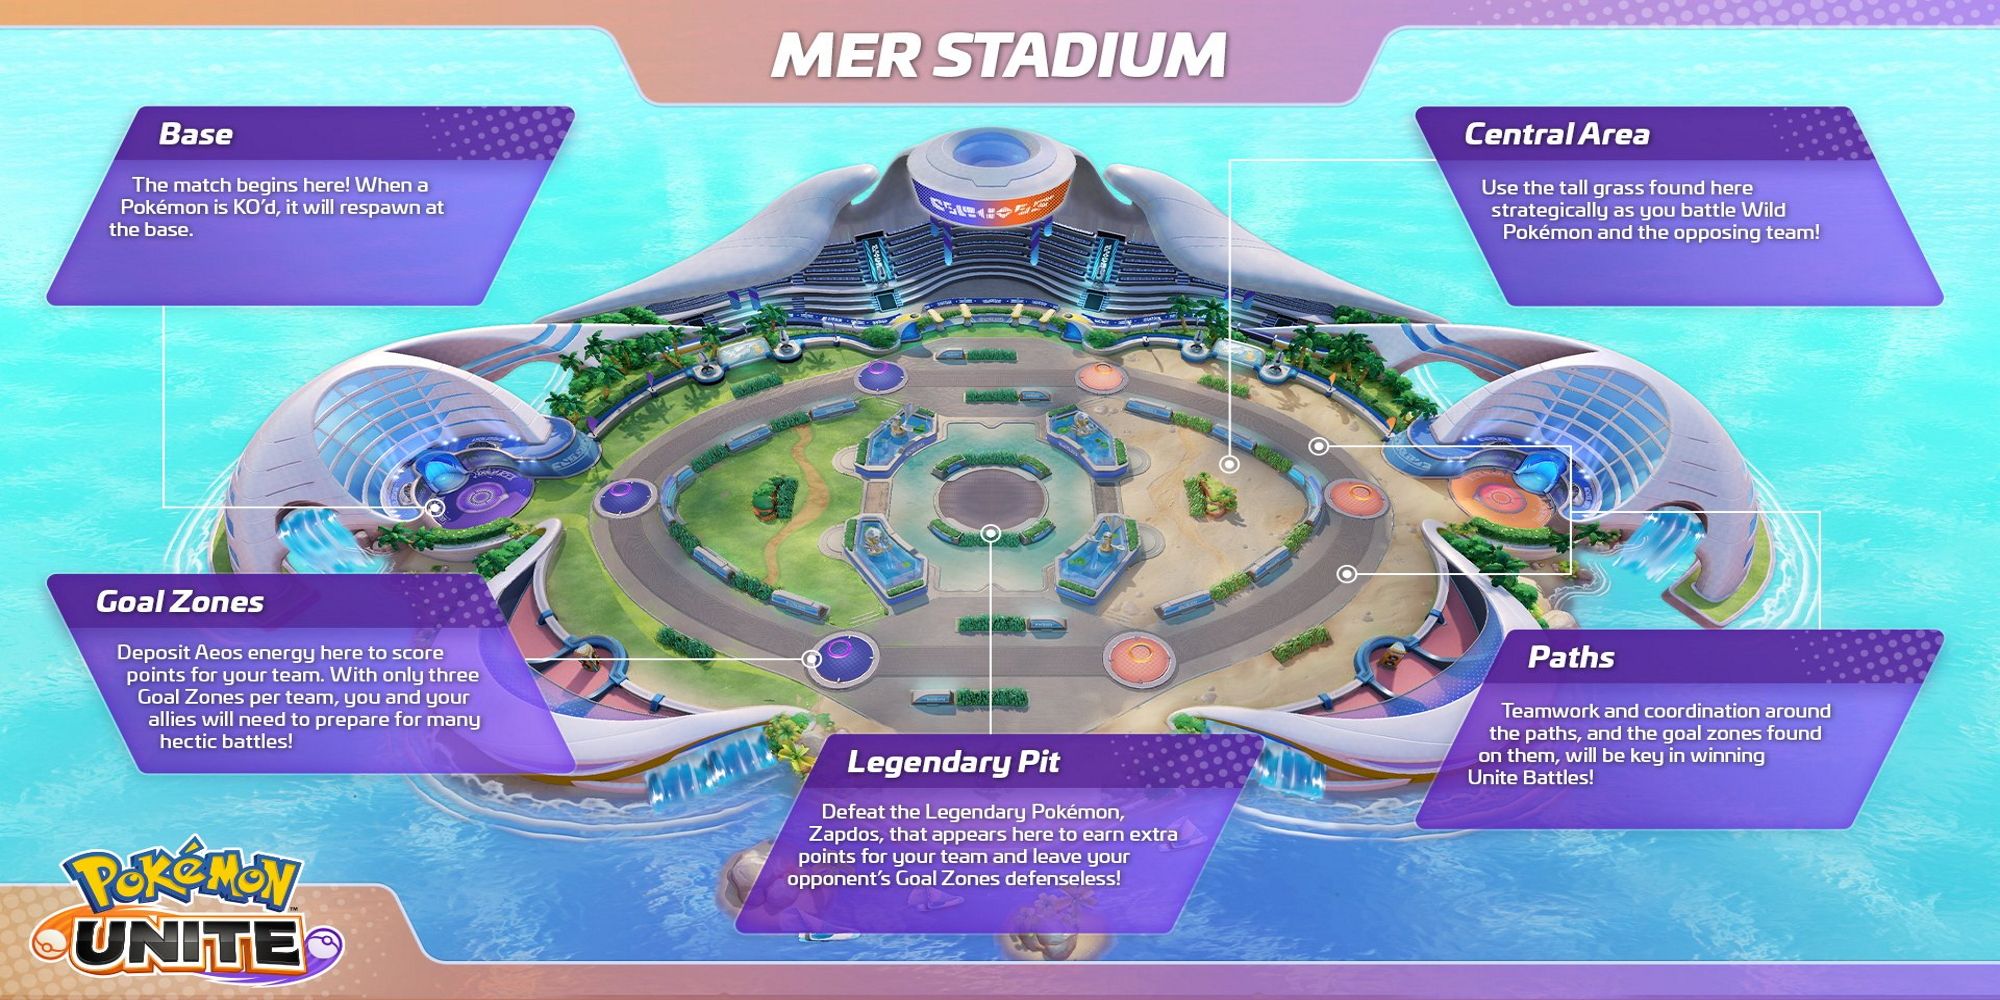 Pokemon Unite Mer Stadium map and labels